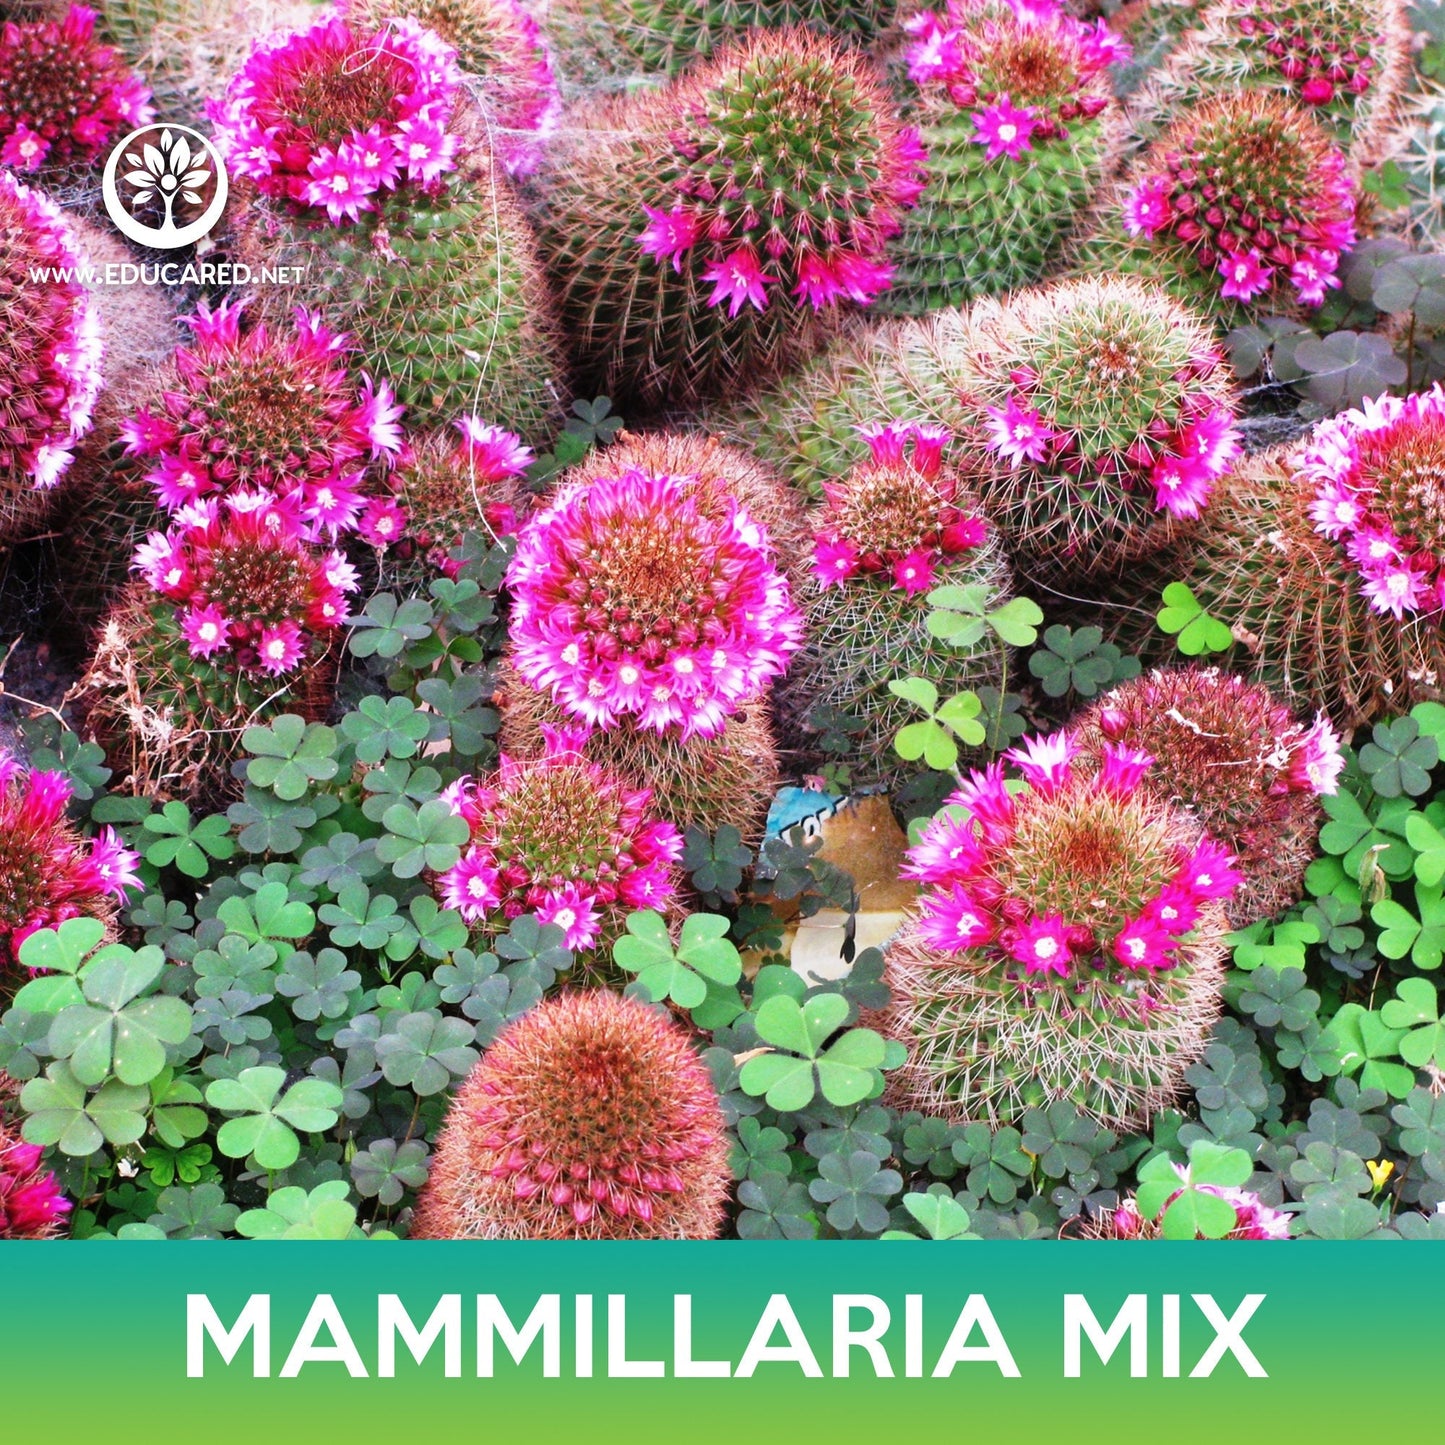 Mammillaria Cactus Mix Seeds